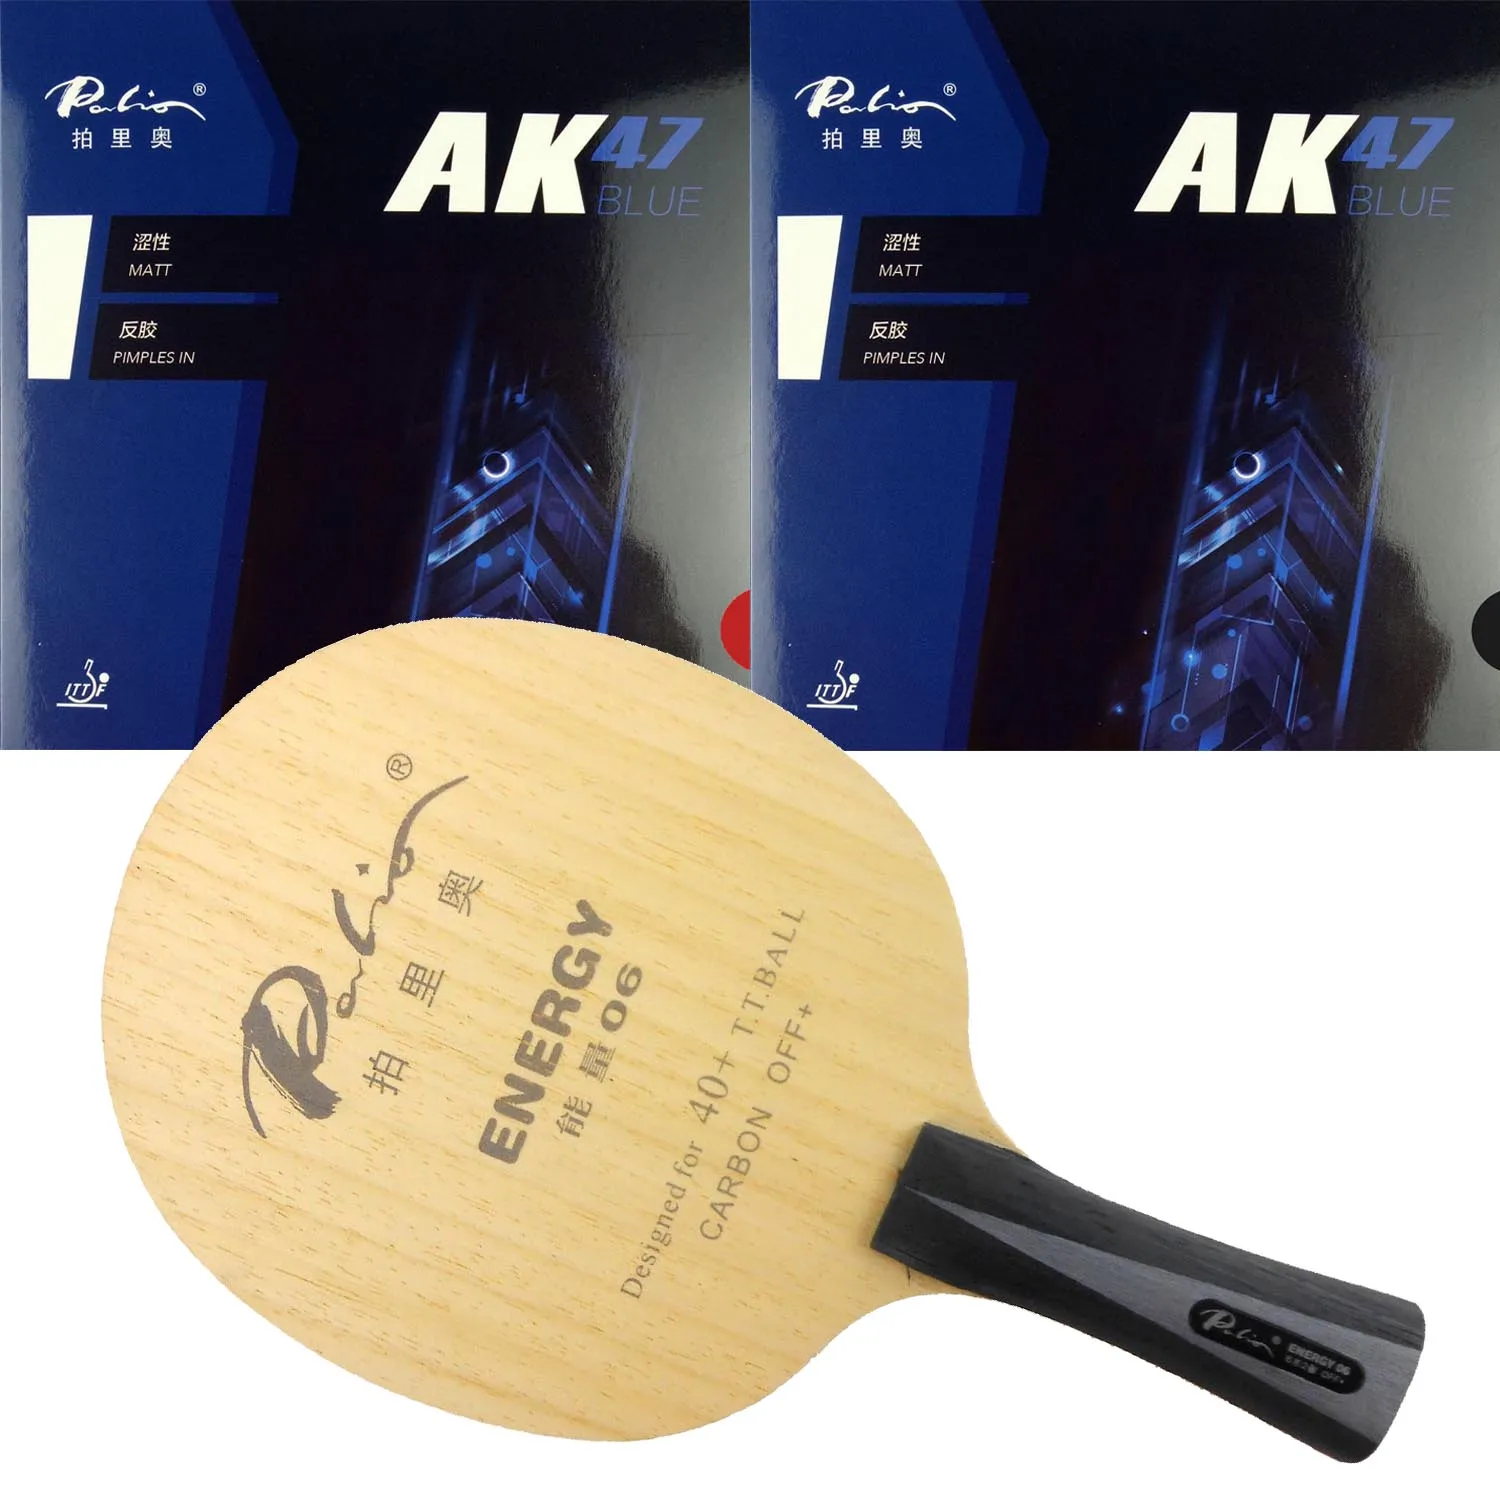 Pro Table Tennis Combo Racket Palio energy 06 table tennis blade with 2x Palio AK47 BLUE Table Tennis Rubber